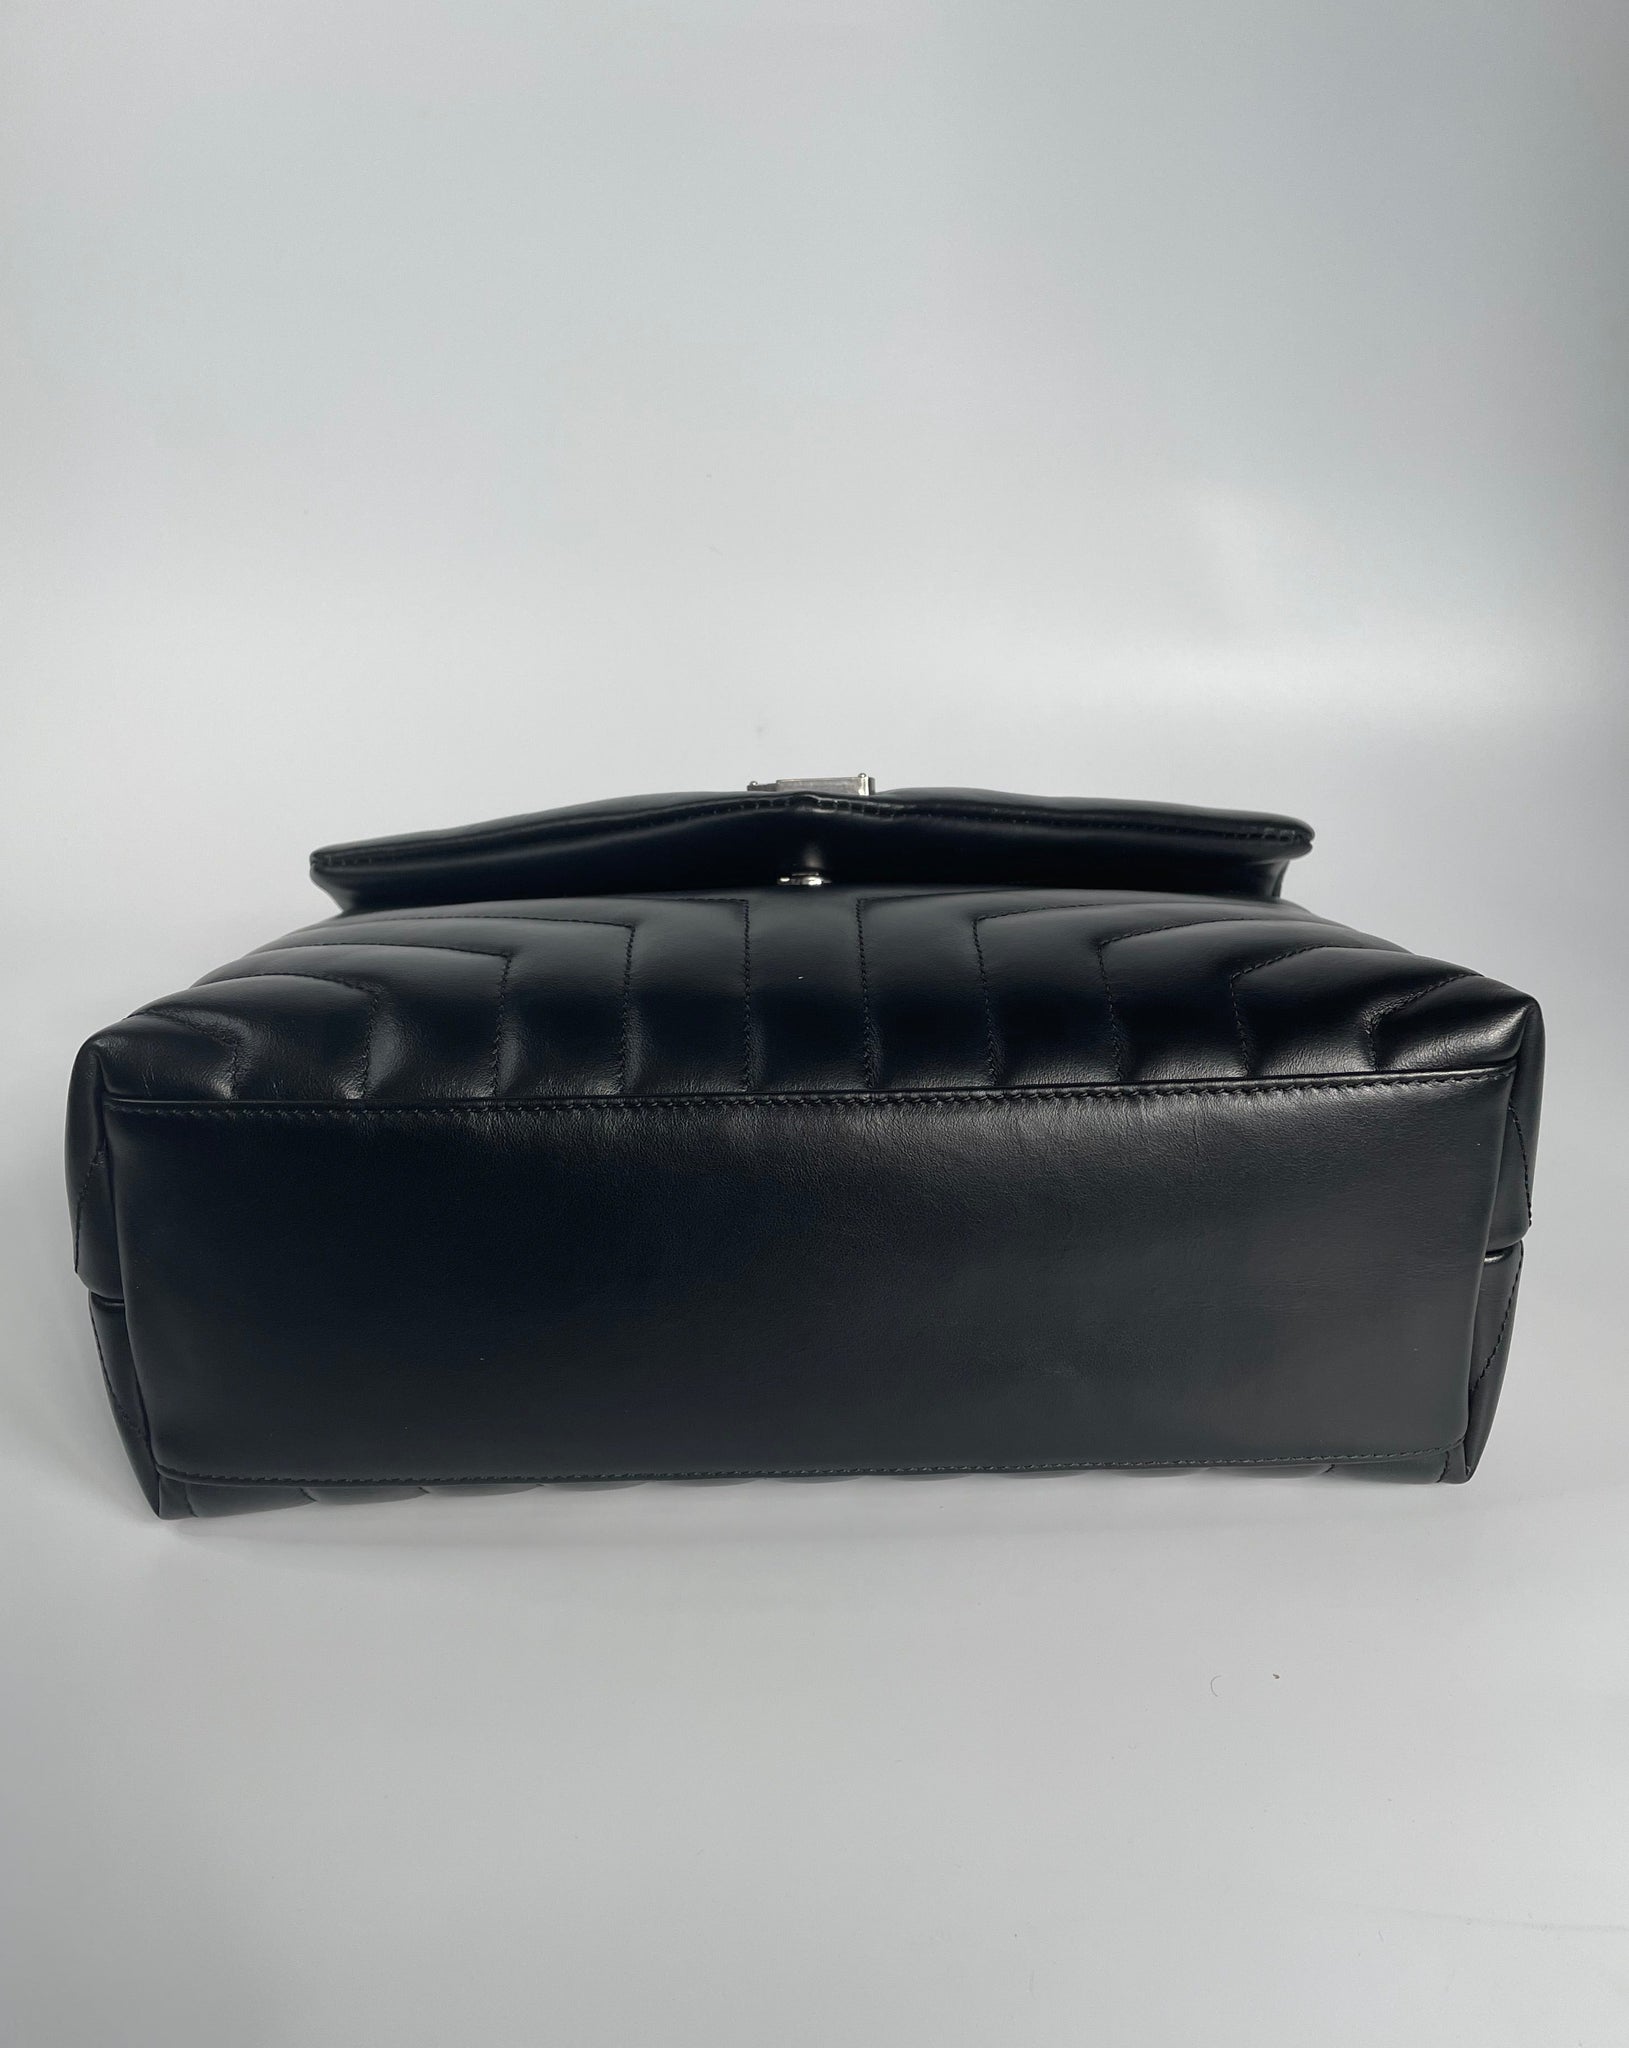 Yves Saint Laurent YSL LouLou Shoulder Chain Bag Black Gold Matelassé $2450  MSRP